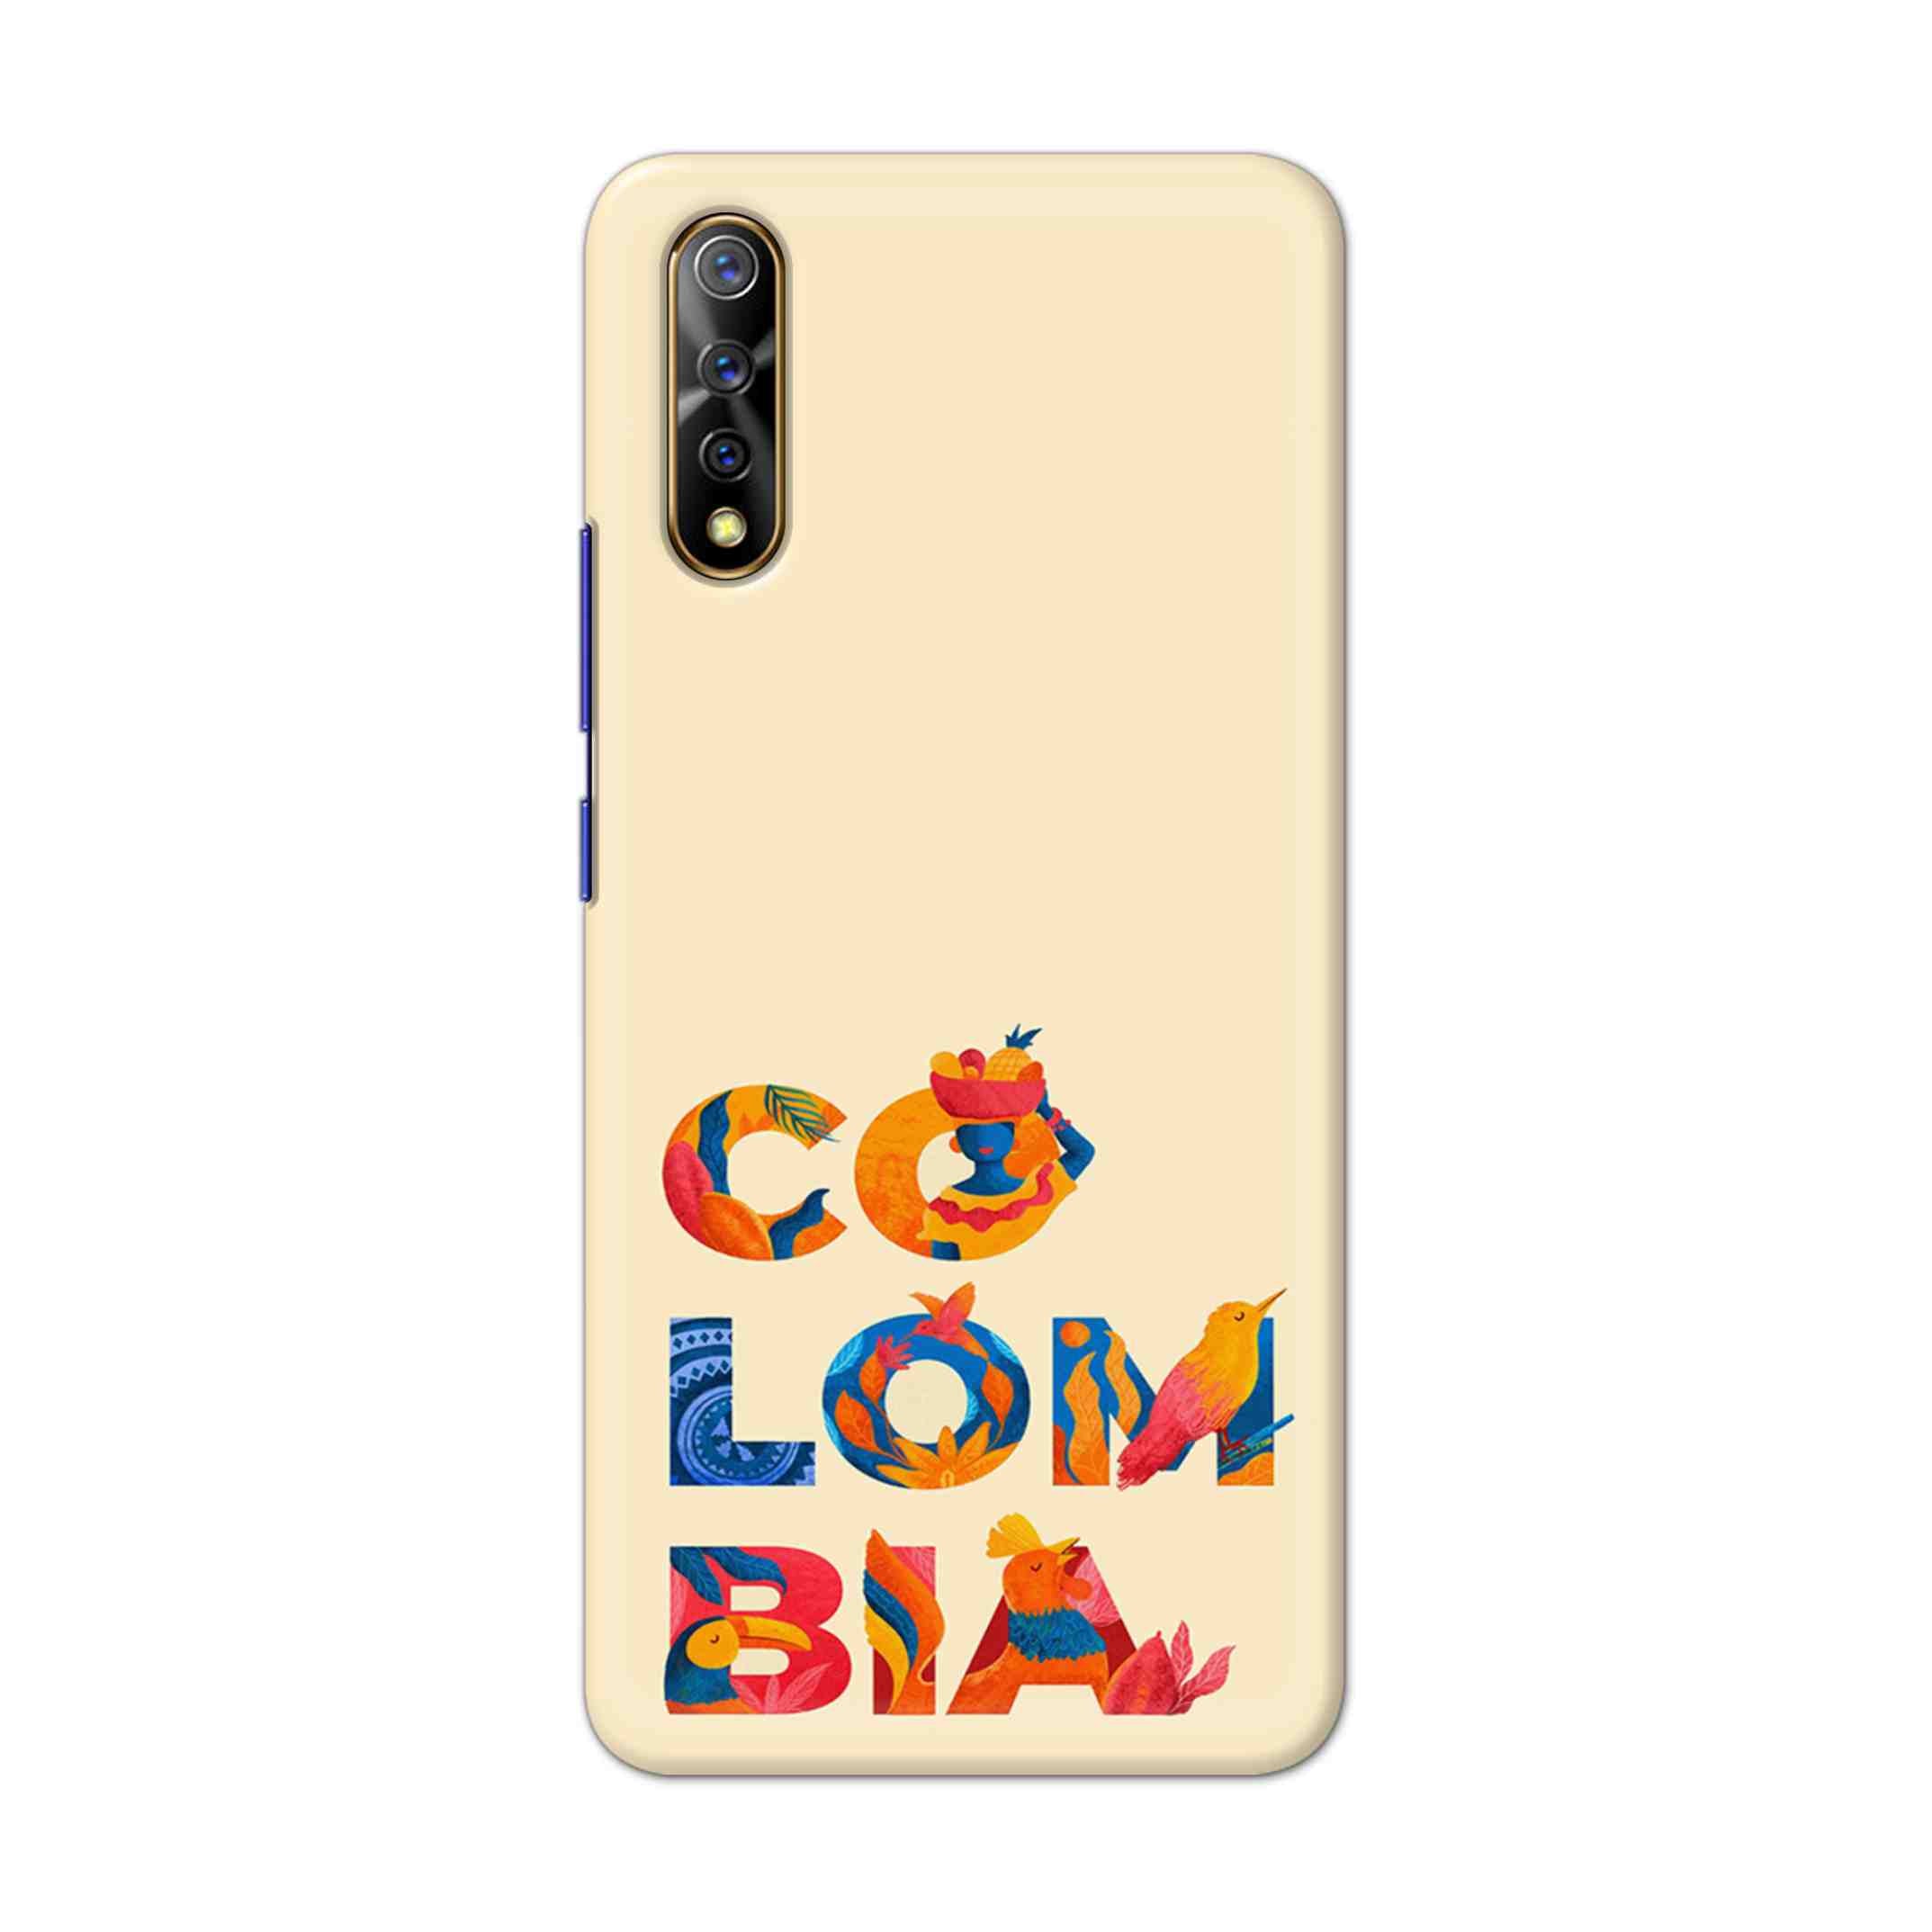 Buy Colombia Hard Back Mobile Phone Case Cover For Vivo S1 / Z1x Online